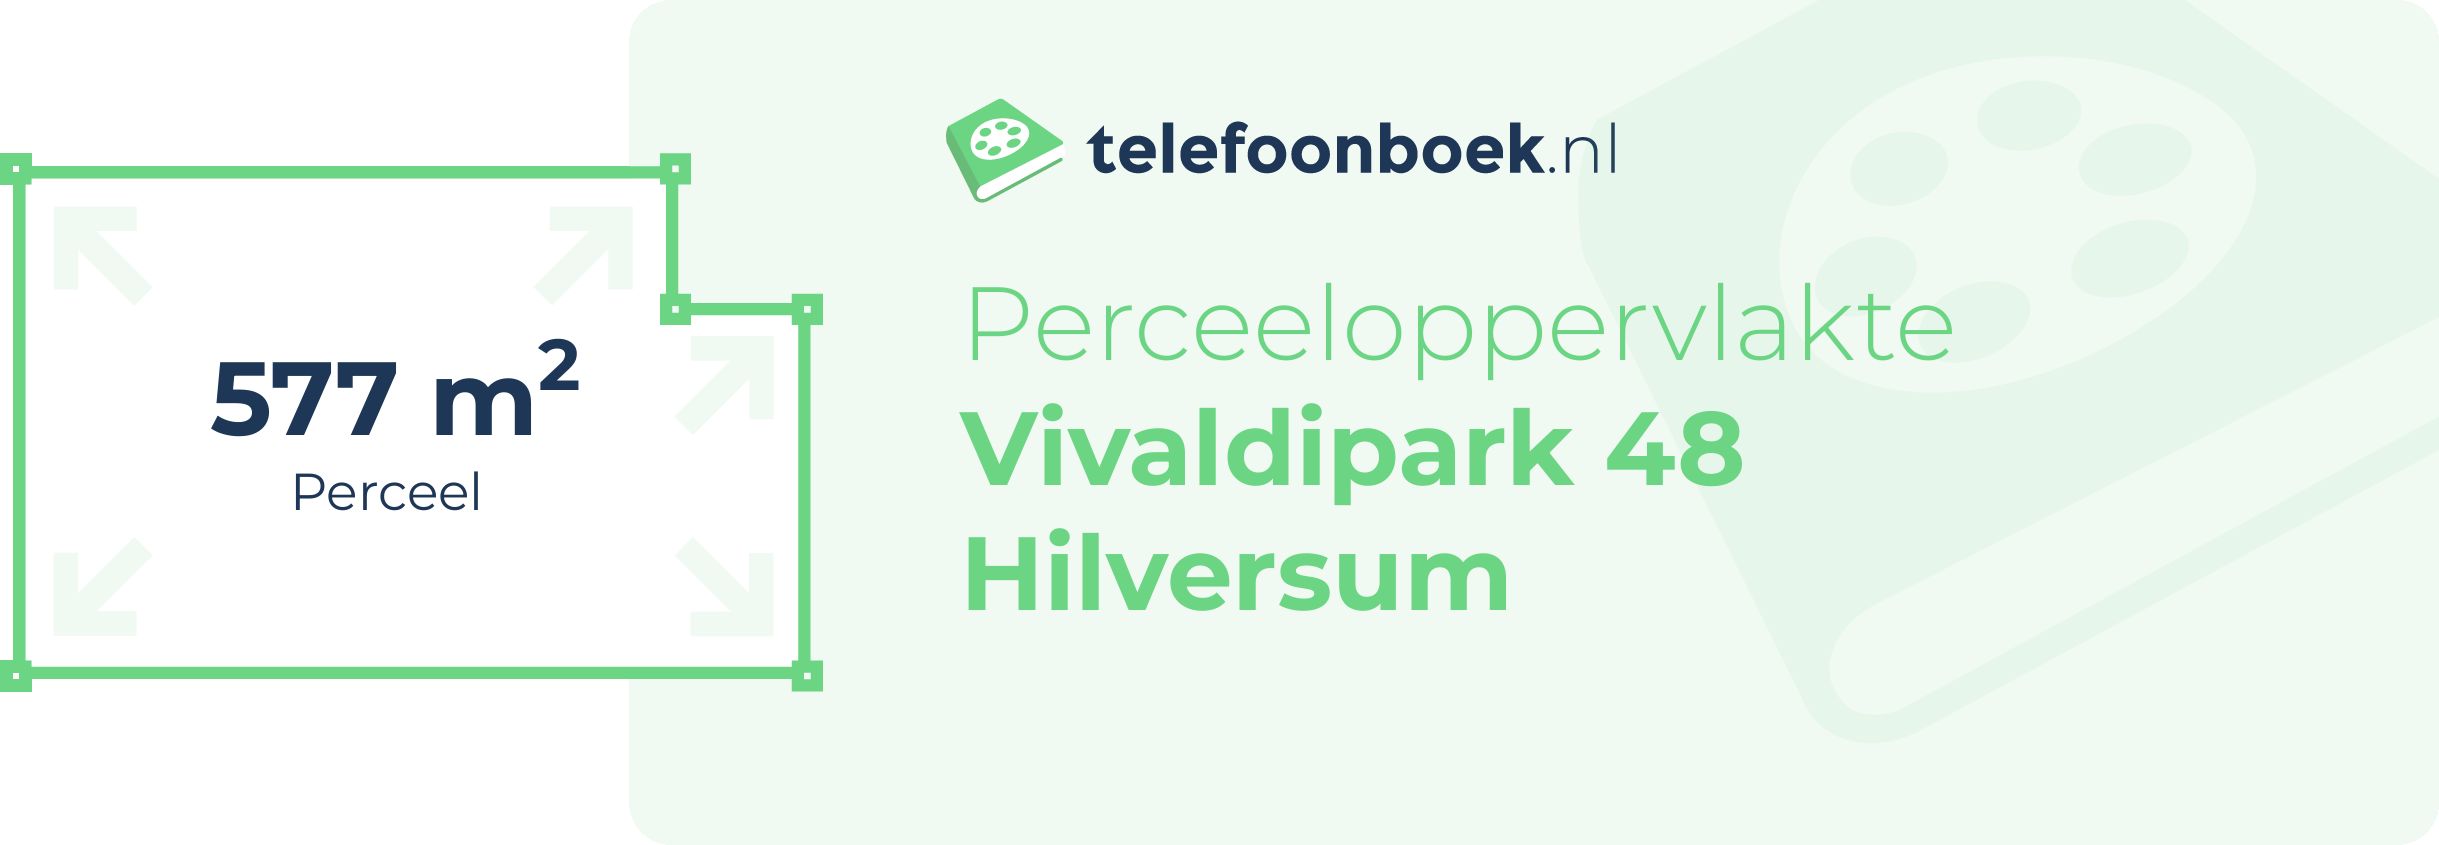 Perceeloppervlakte Vivaldipark 48 Hilversum